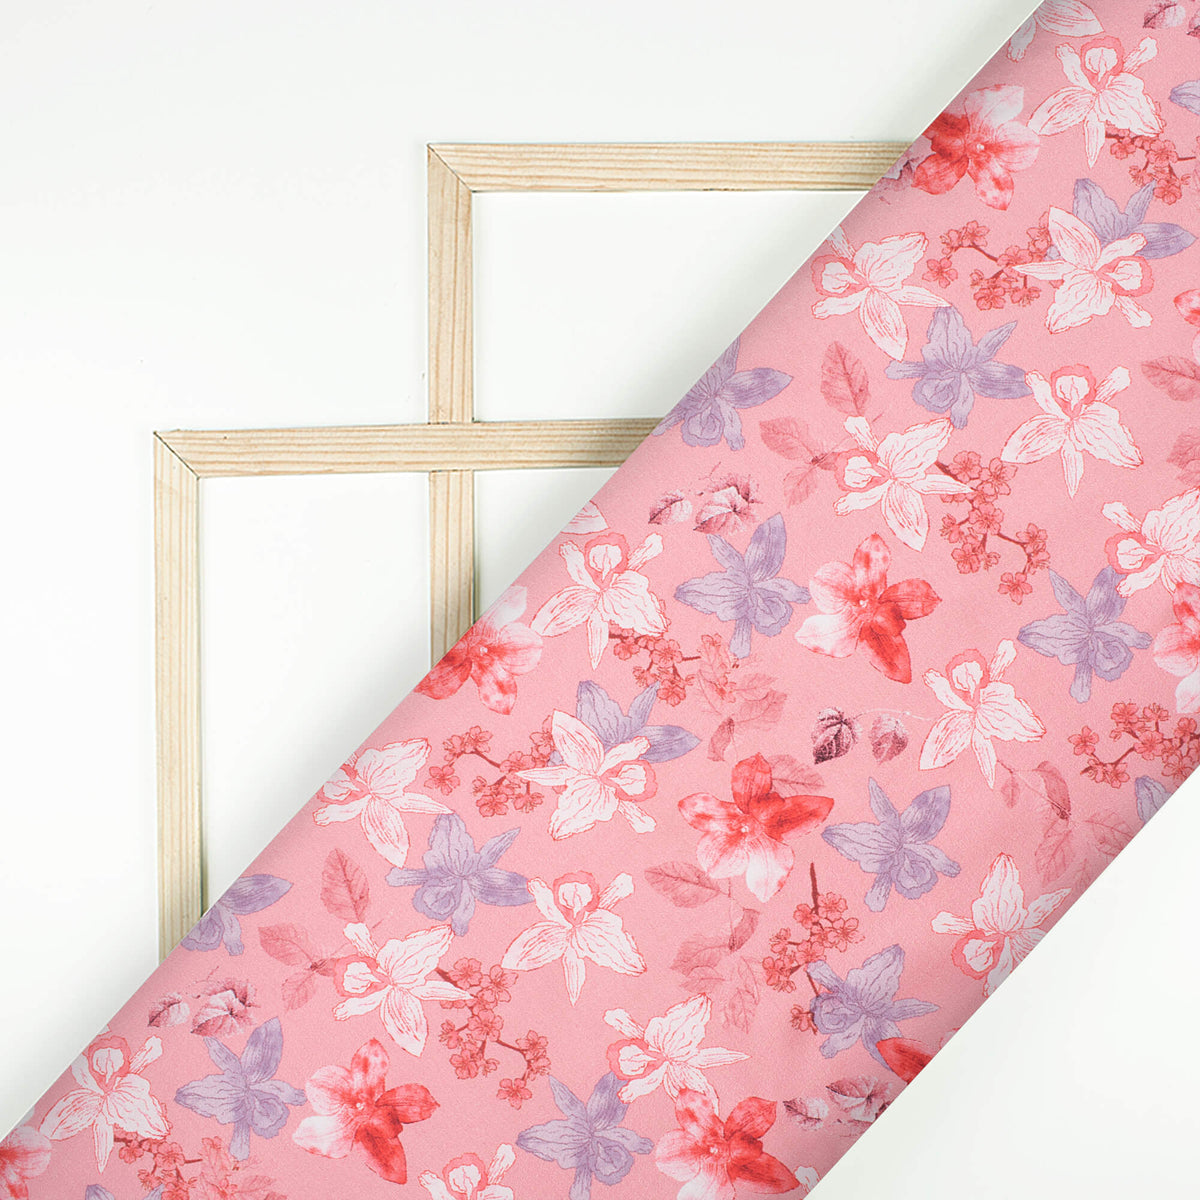 Taffy Pink And brick Red Floral Pattern Digital Print Japan Satin Fabric